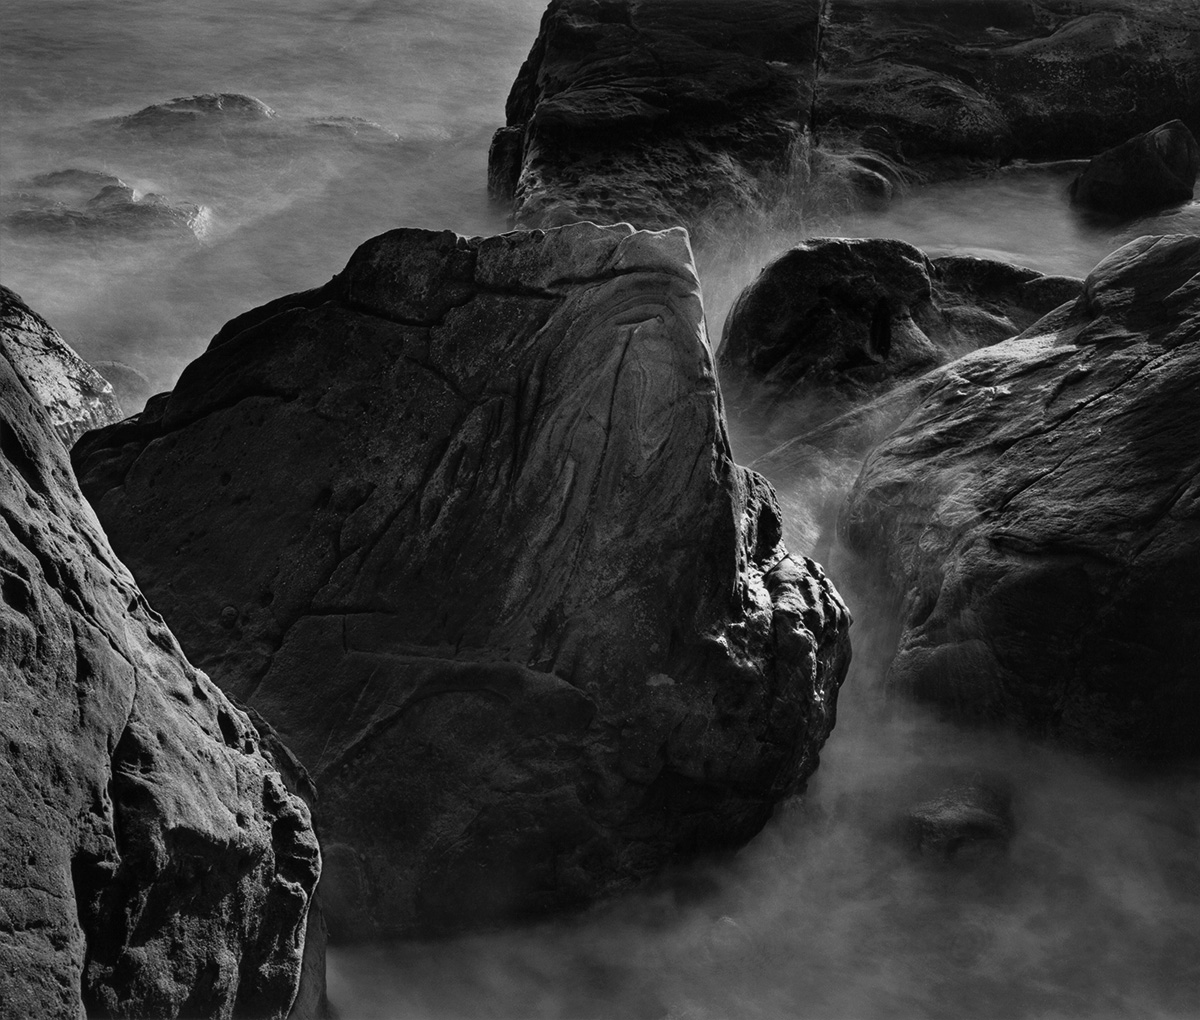 Wynn Bullock: Rocks and Waves, 1968